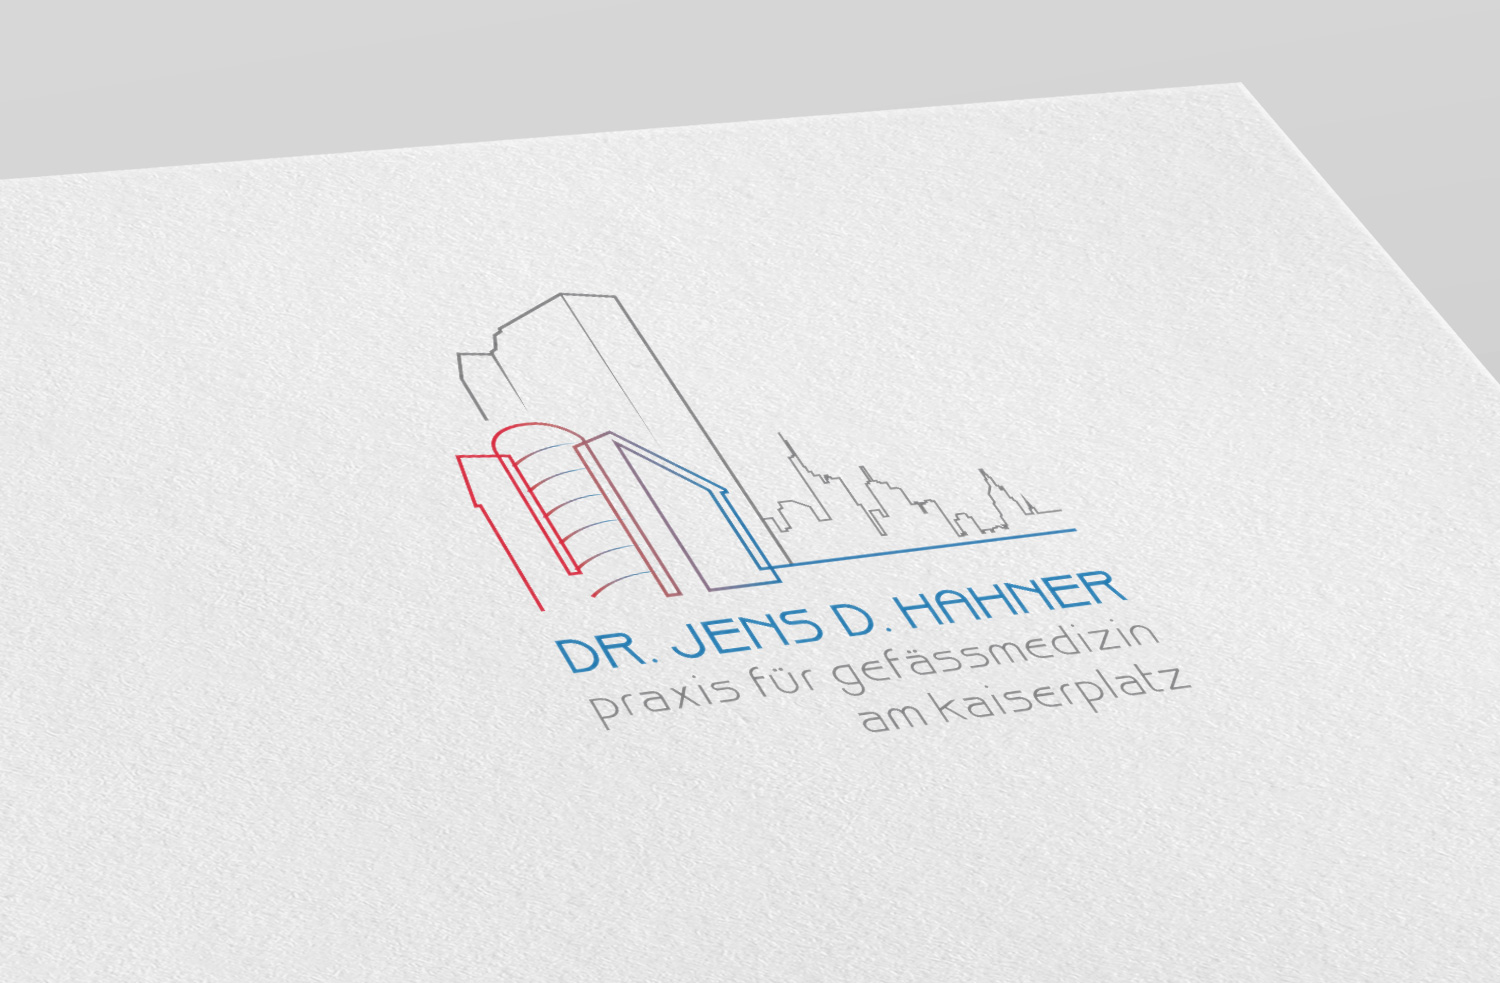 Praxis für Gefäßchirurgie Dr. Jens D. Hahner in Frankfurt am Main, Logodesign